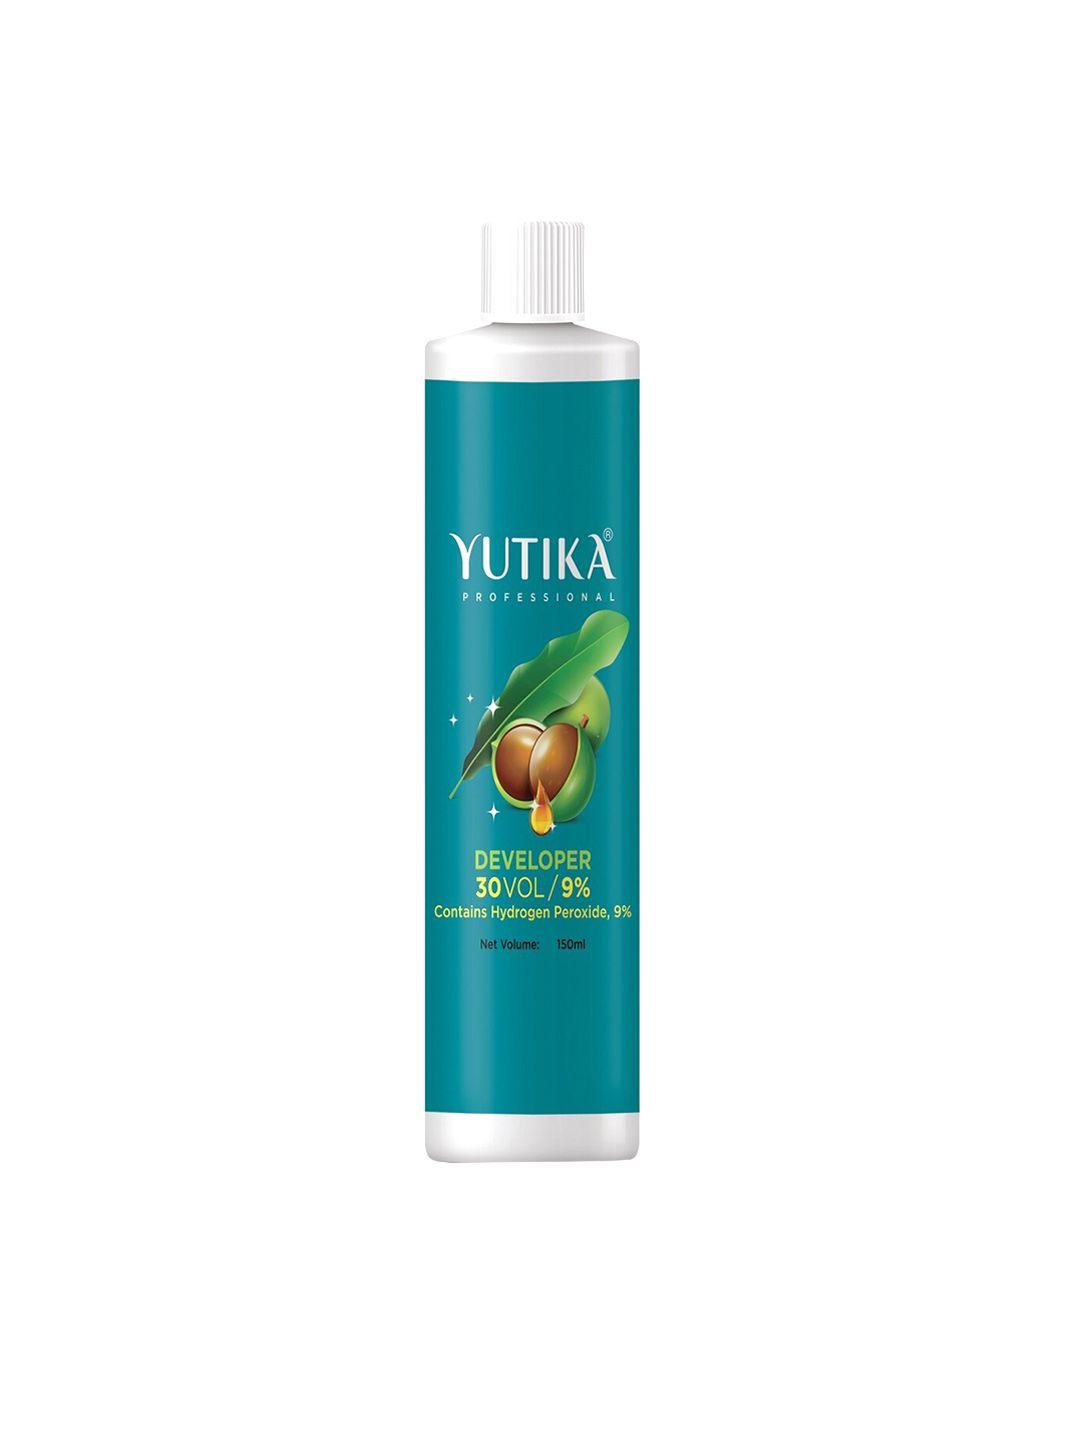 yutika professional 30 volume 9% hydrogen peroxide hair developer - 150 ml